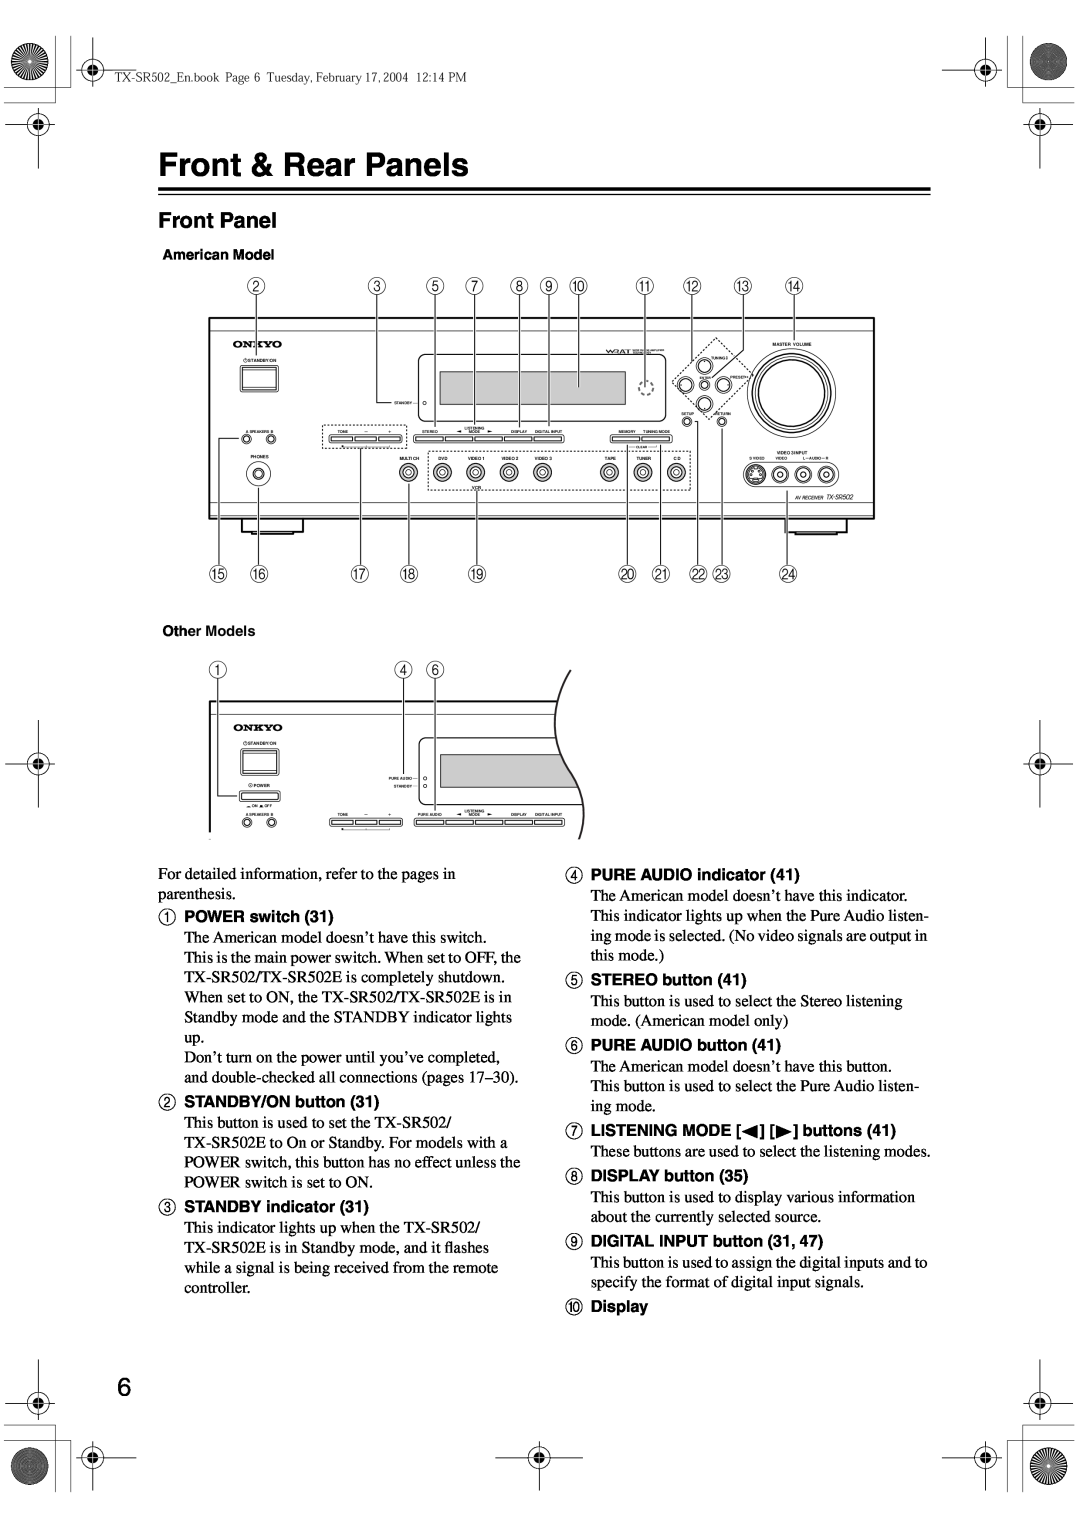 Onkyo TX-SR502E instruction manual Front & Rear Panels, Front Panel, C 5 G H I J K L M N, T U V W 